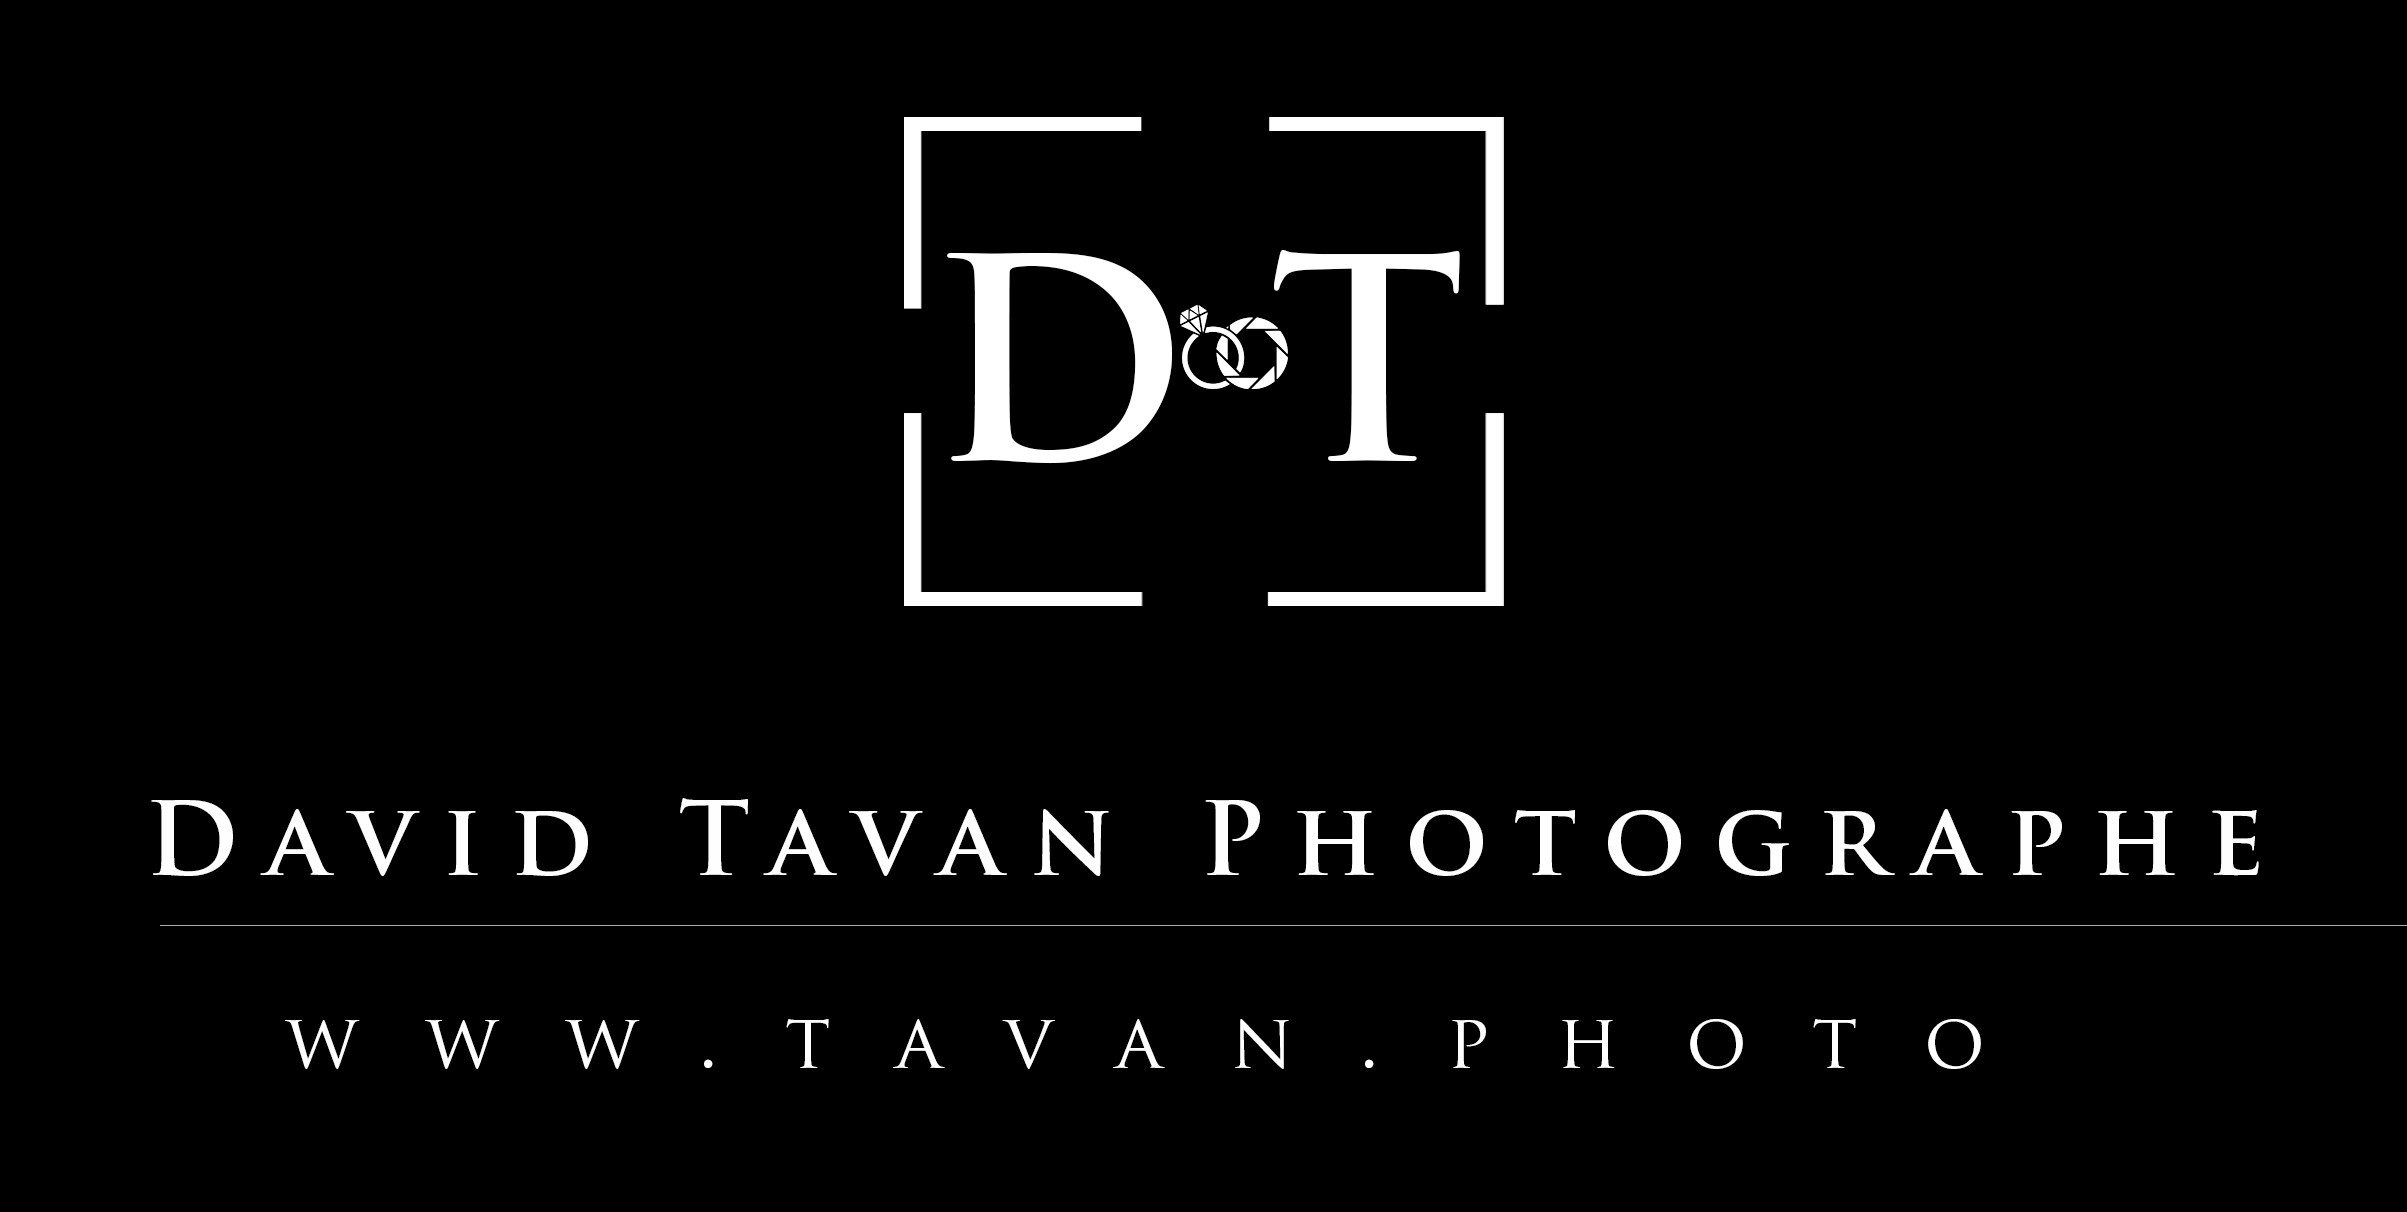 David Tavan photographe professionnel mariage 86